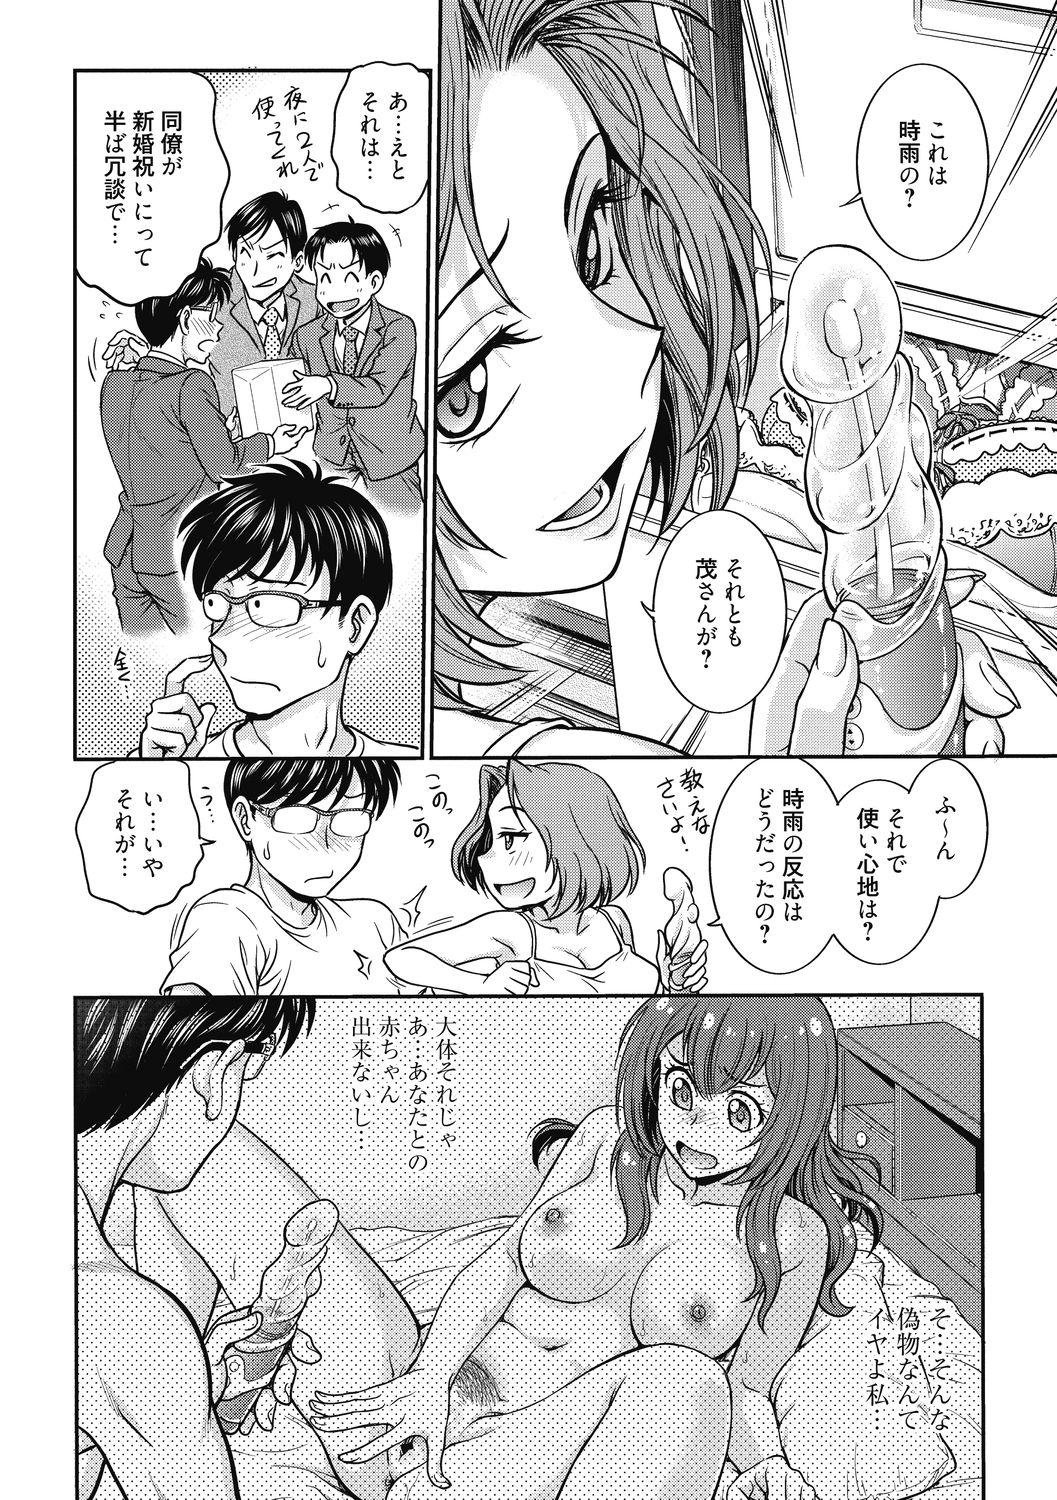 Kanojo no Shitagi o Nusundara... - I tried to steal her underwear... 115